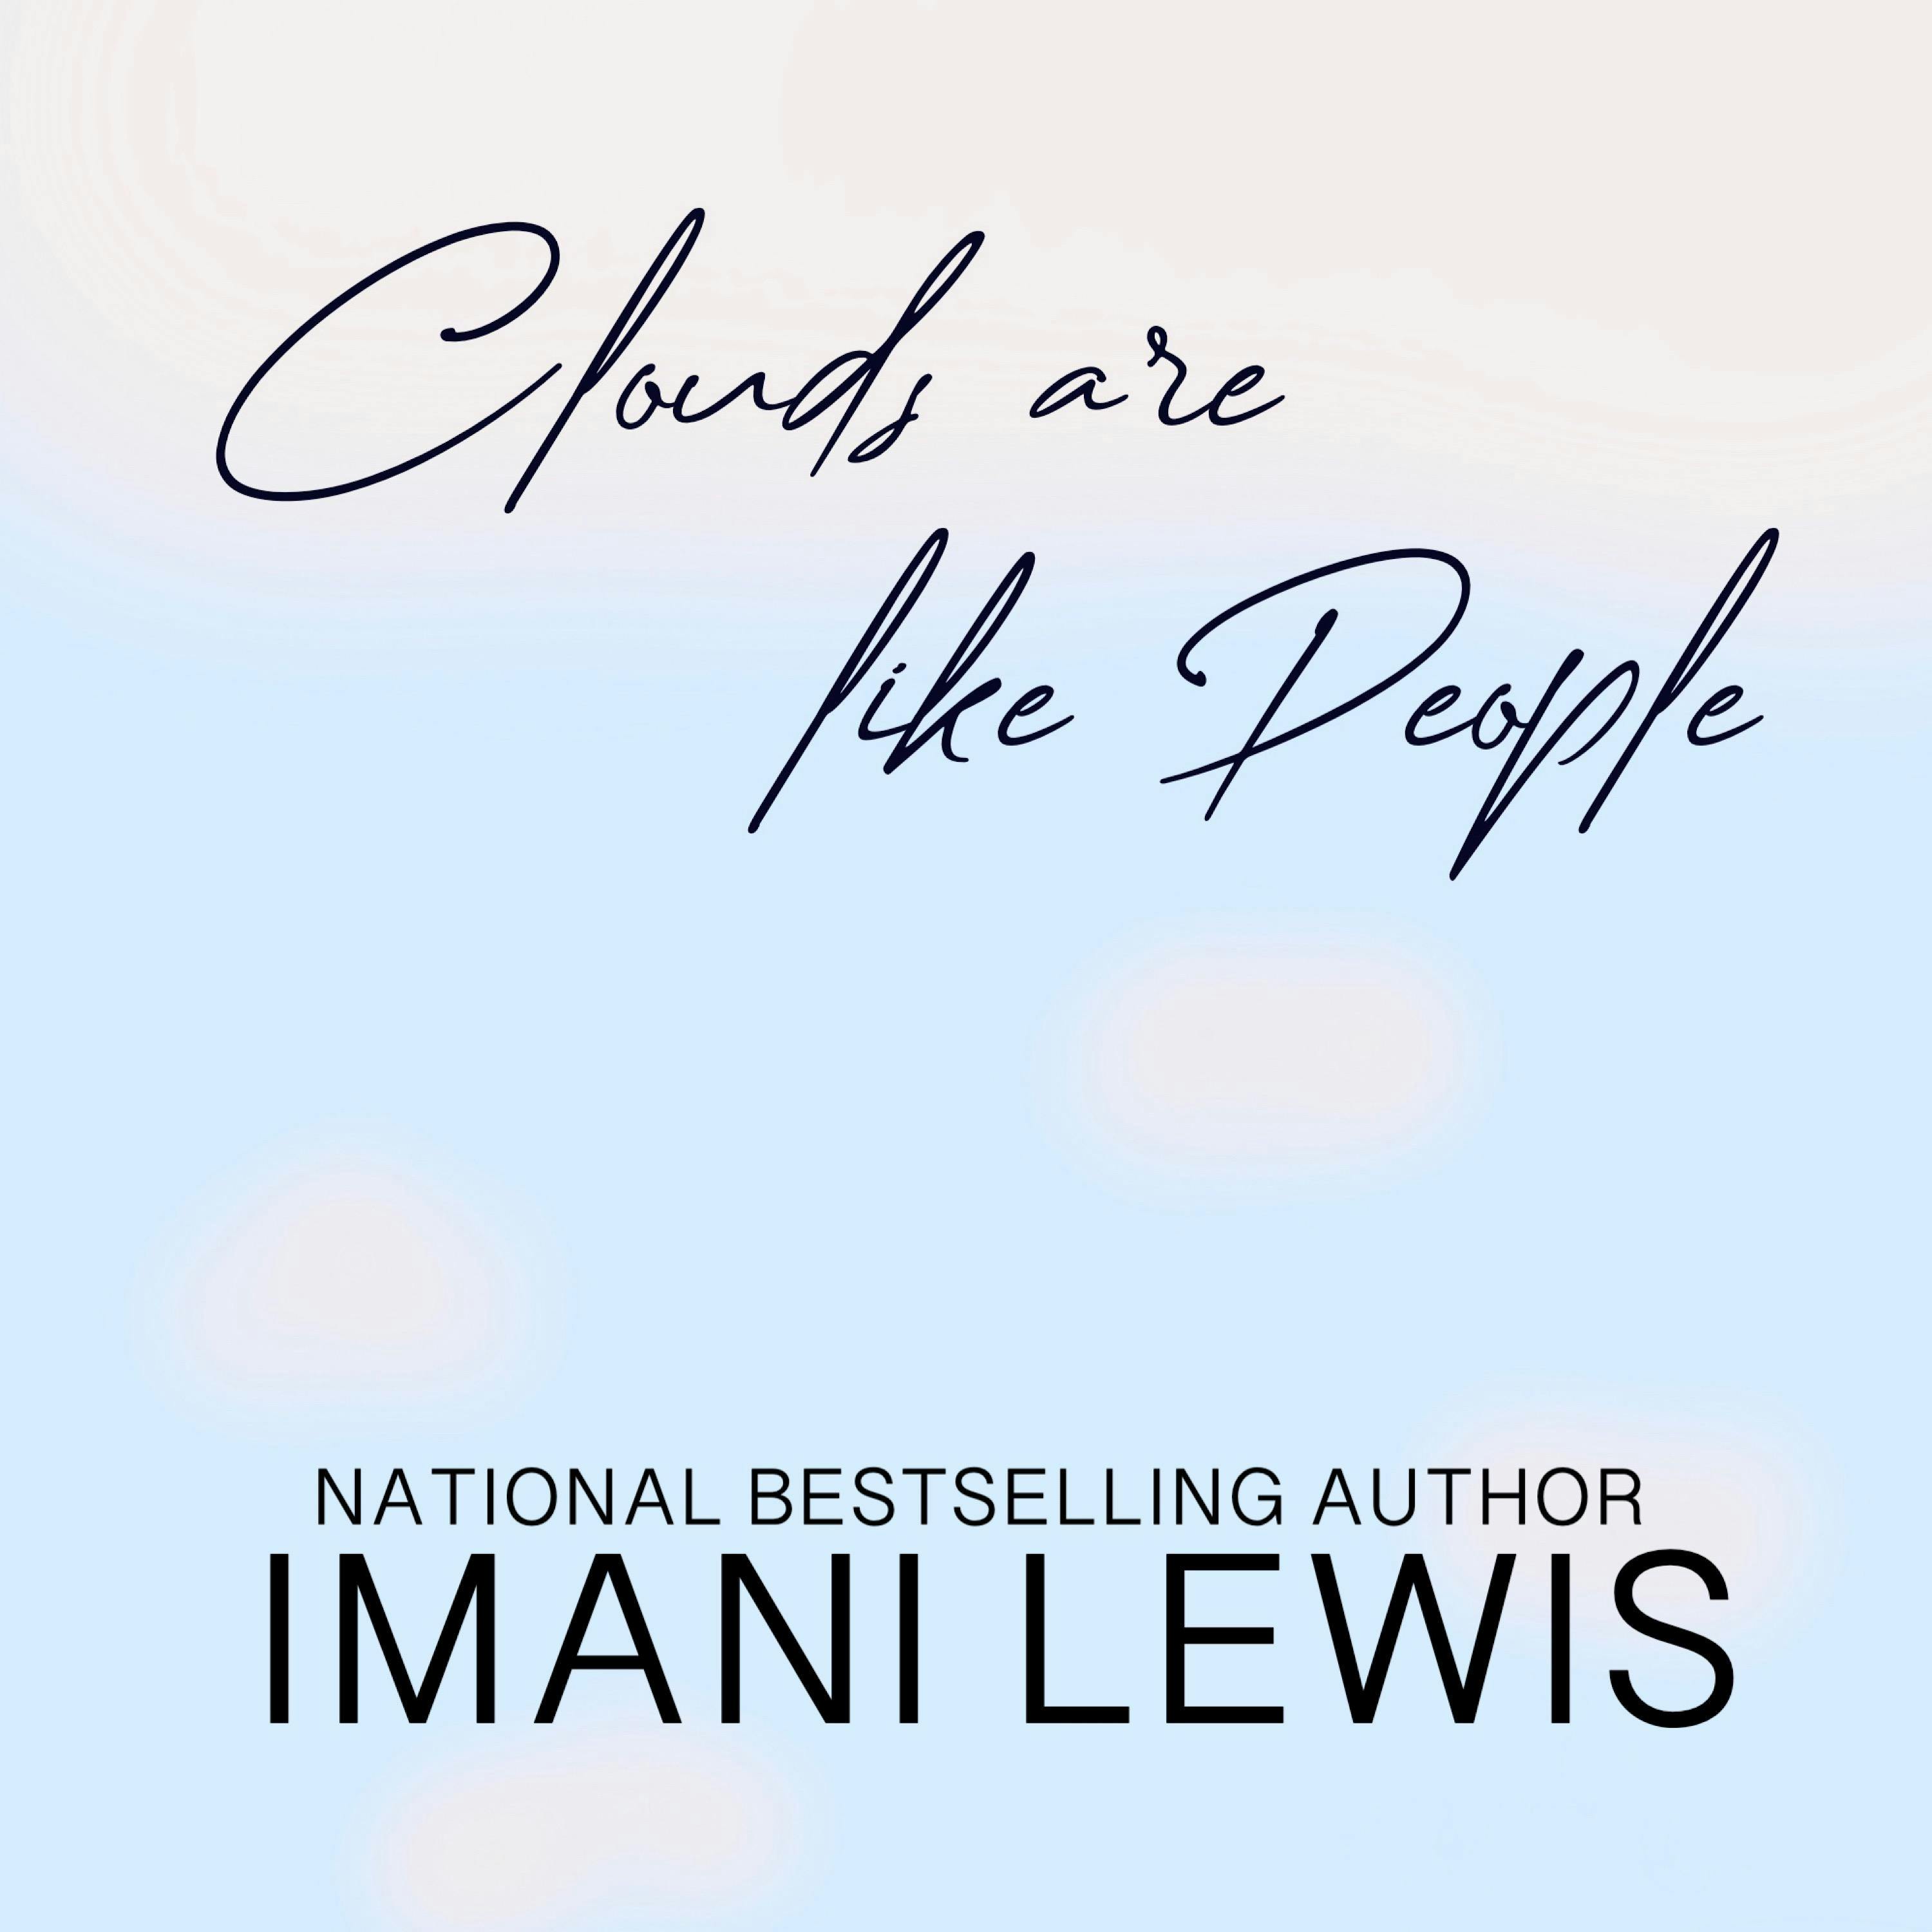 Clouds are like People - Imani Lewis